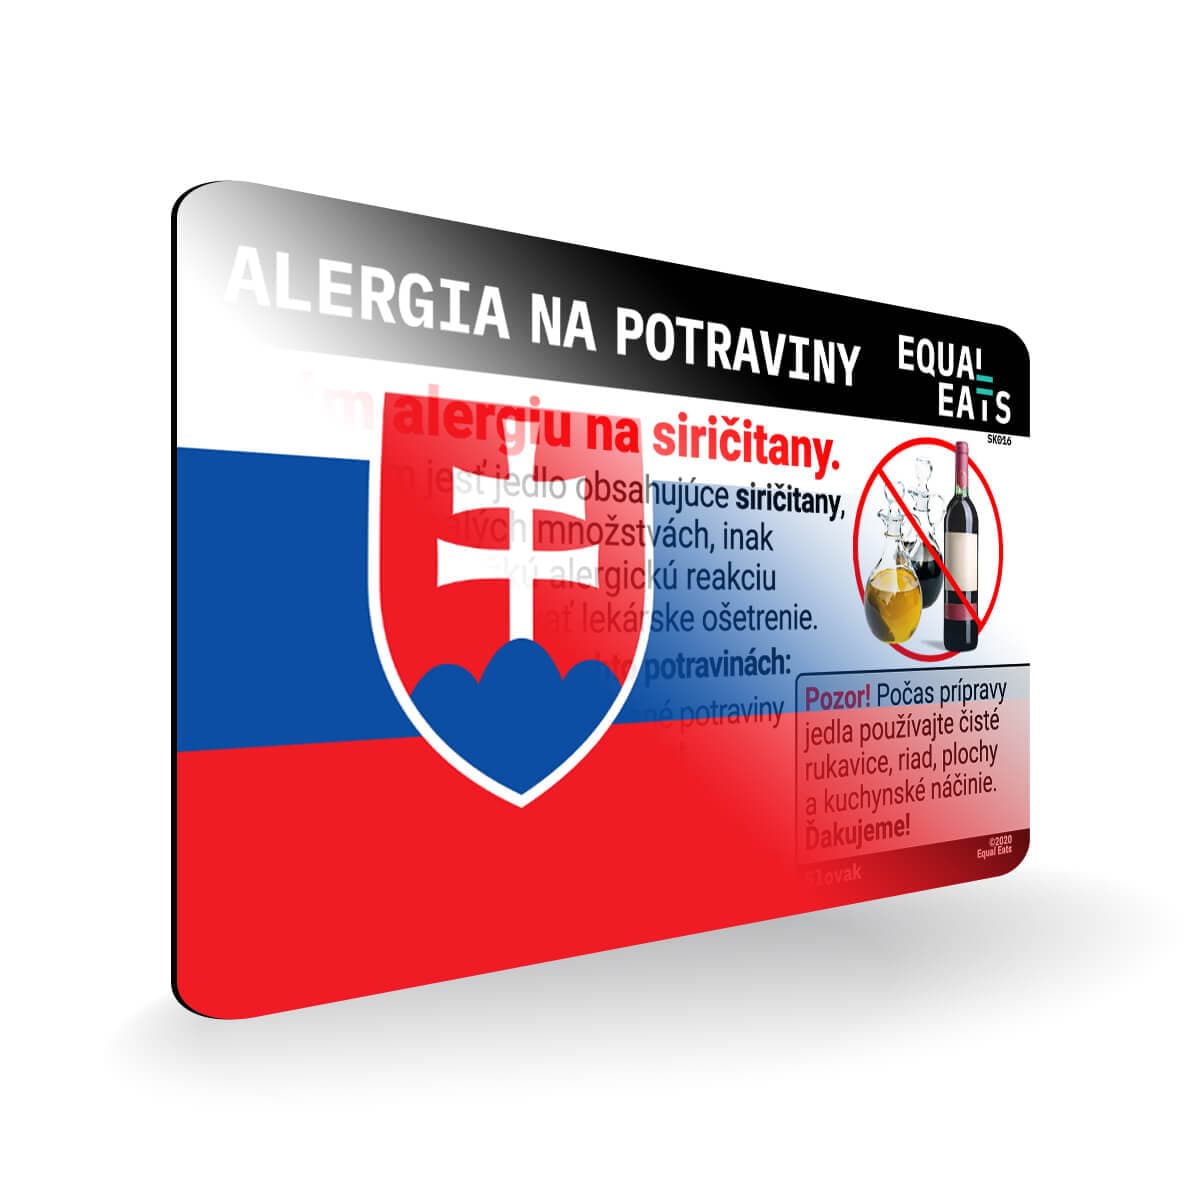 Sulfite Allergy in Slovak. Sulfite Allergy Card for Slovakia